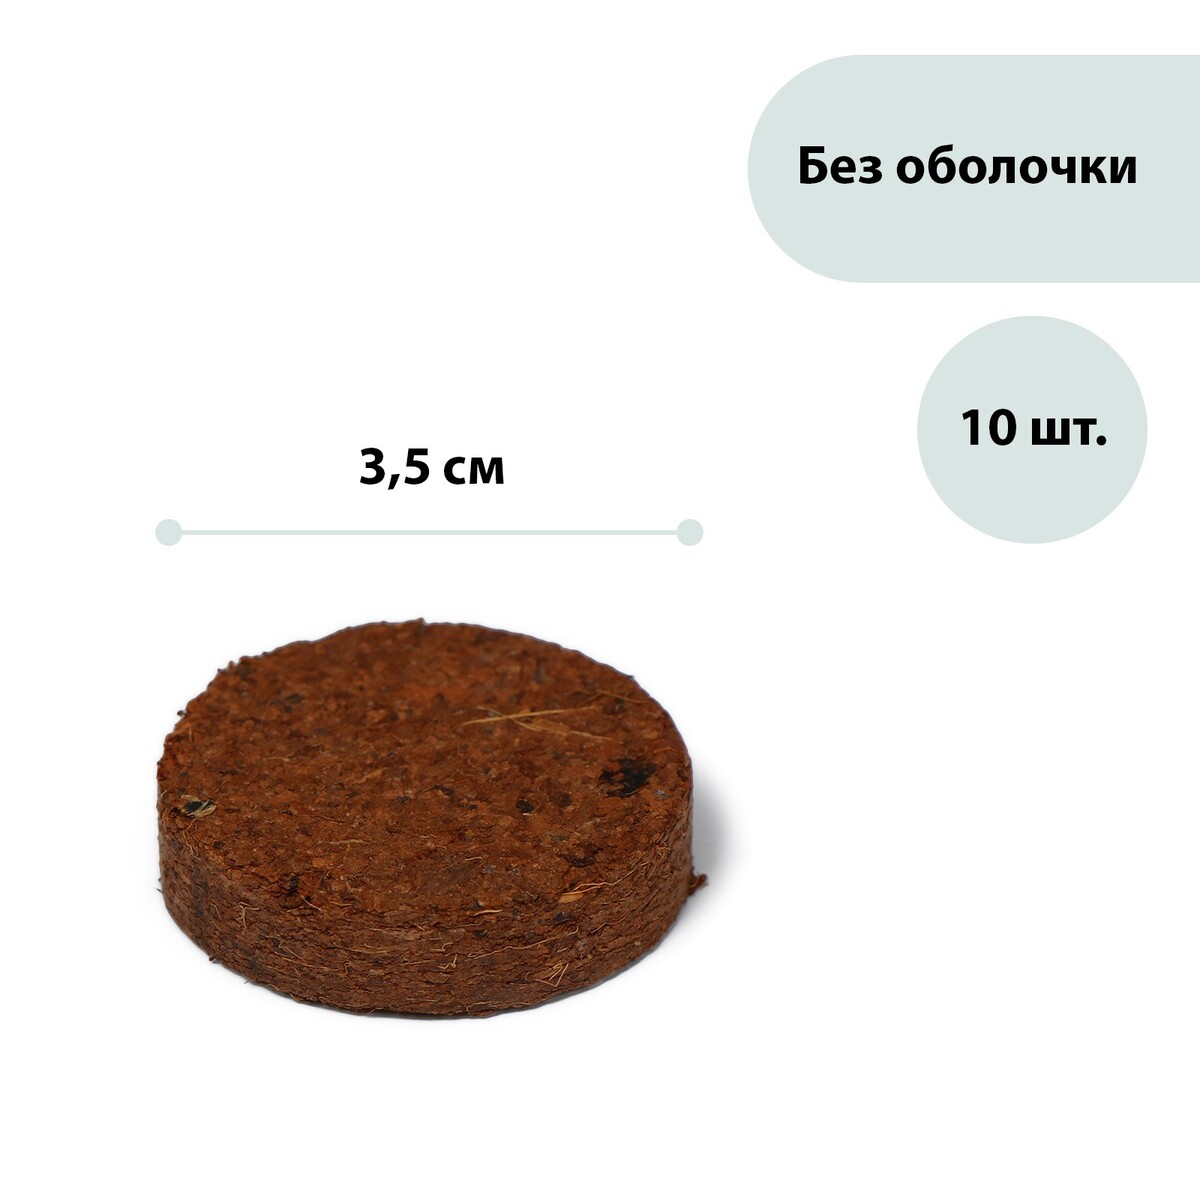 Таблетки кокосовые, d = 3,5 см, без оболочки, набор 10 шт., greengo трихлор таблетки 250 г 0370 astralpool 34433 1 кг